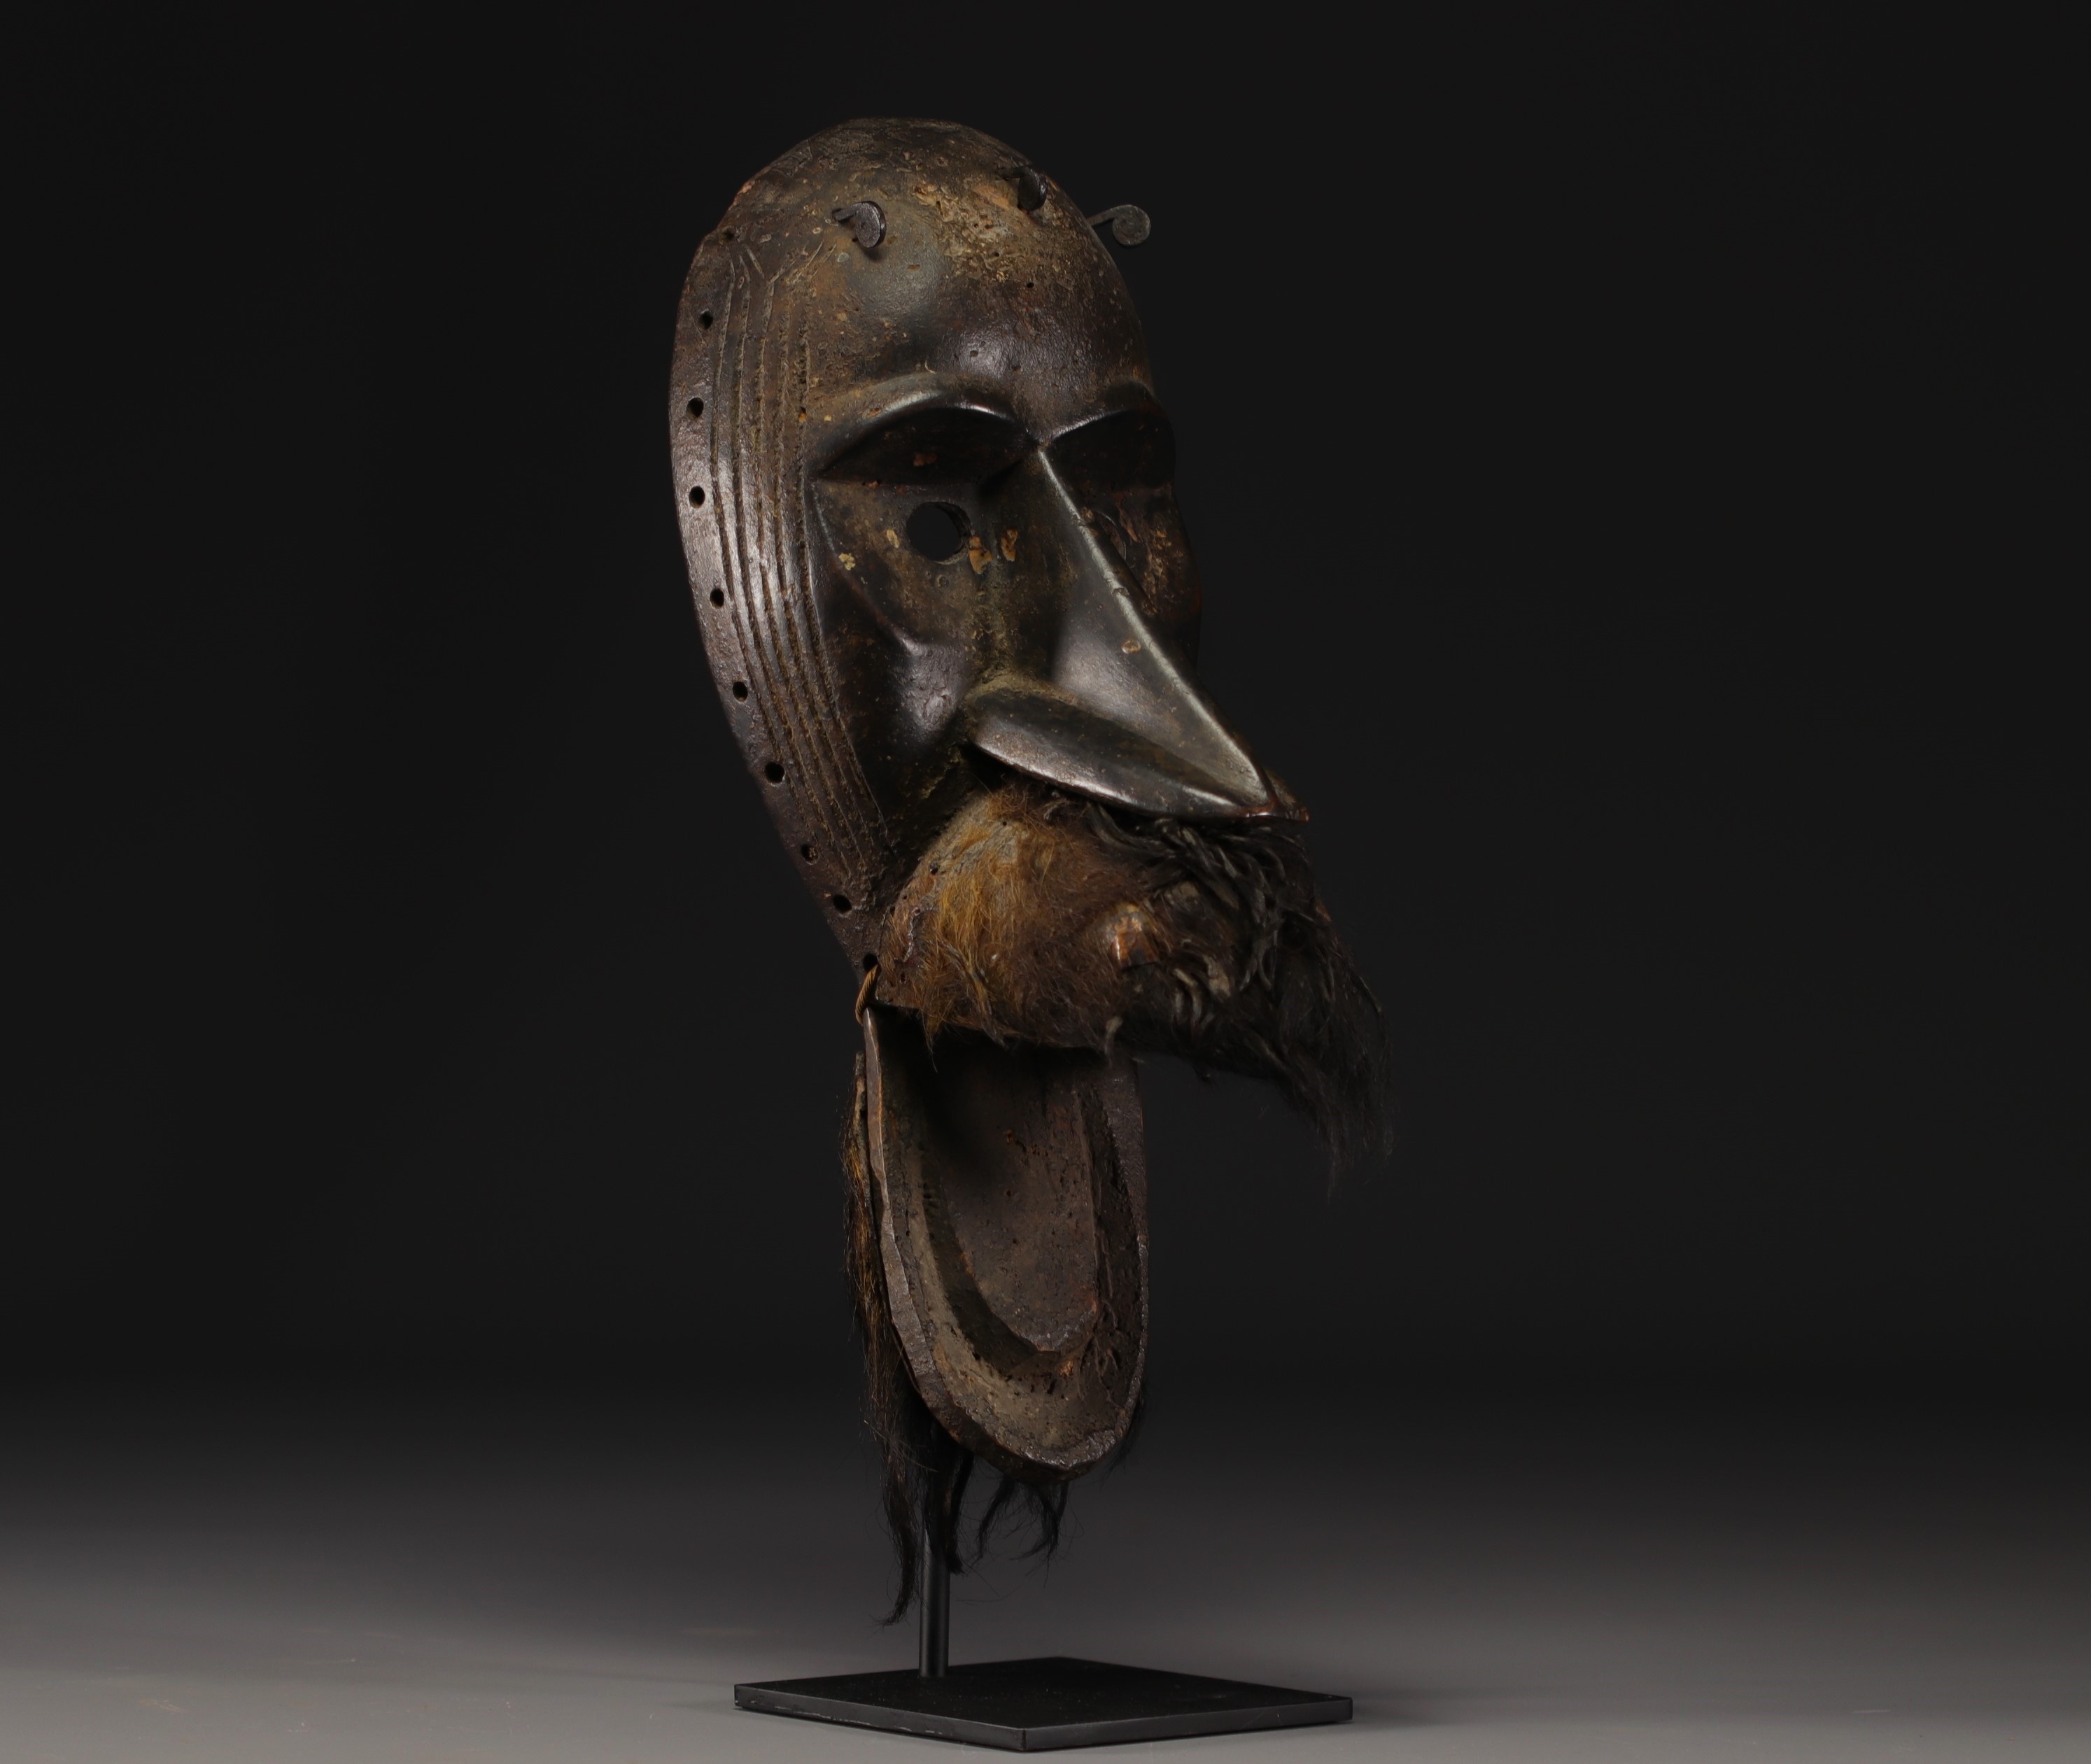 Dan mask - Gagon - Ivory Coast - Image 2 of 6